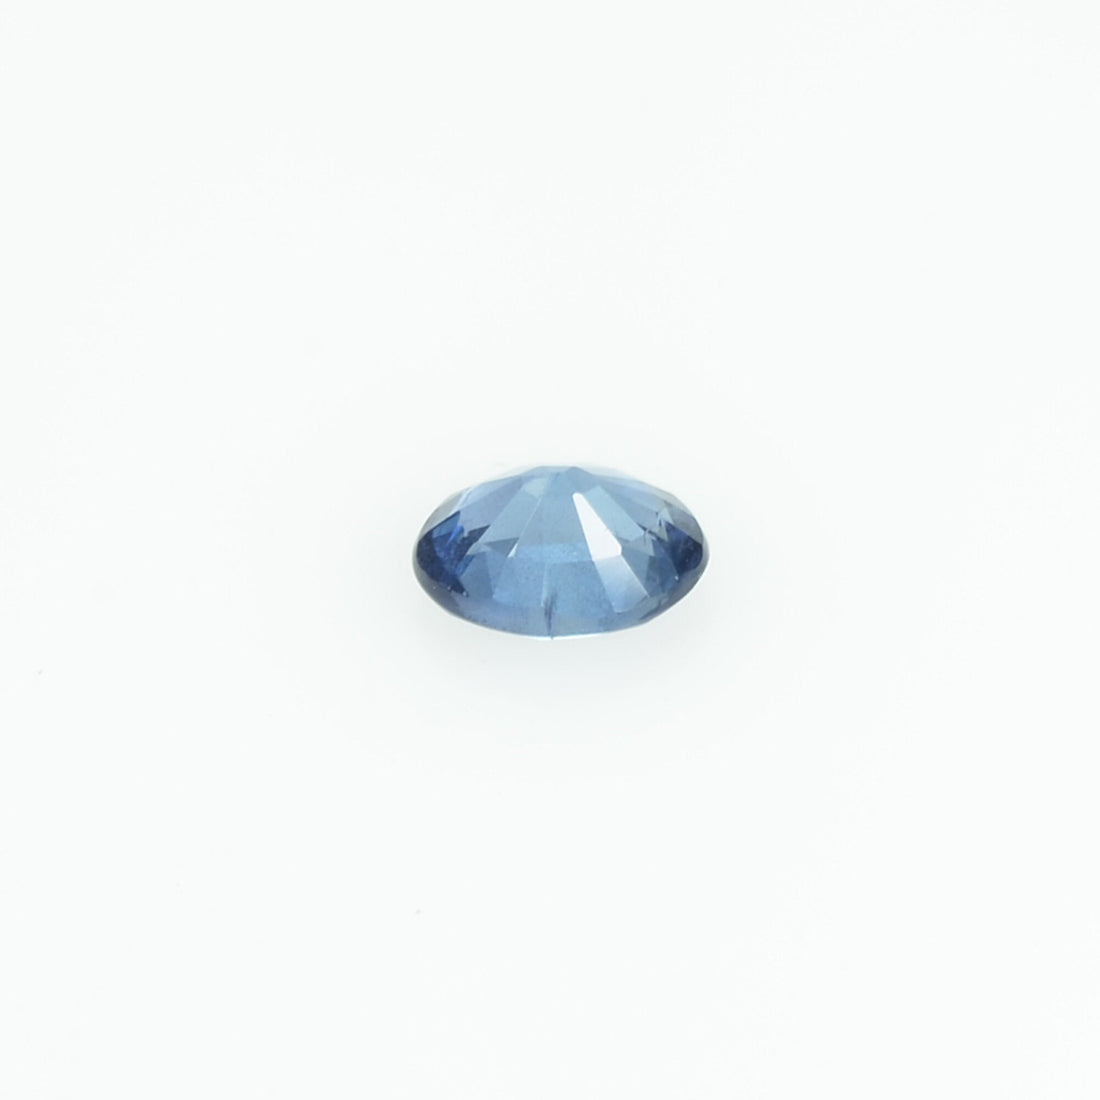 4x3 mm Natural Blue Sapphire Loose Gemstone Oval Cut